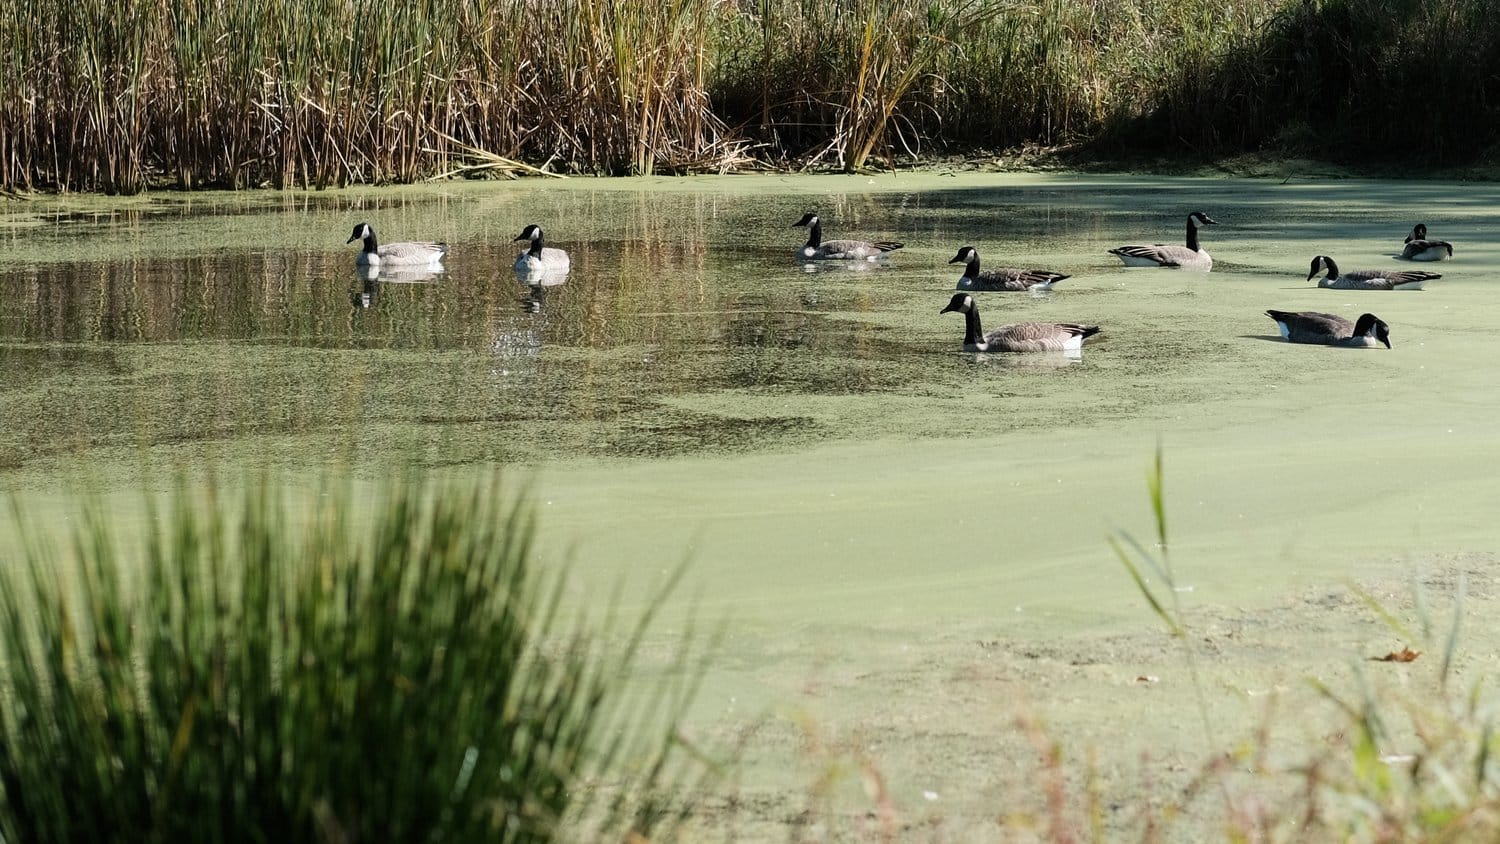 Geese on a little marsh area.